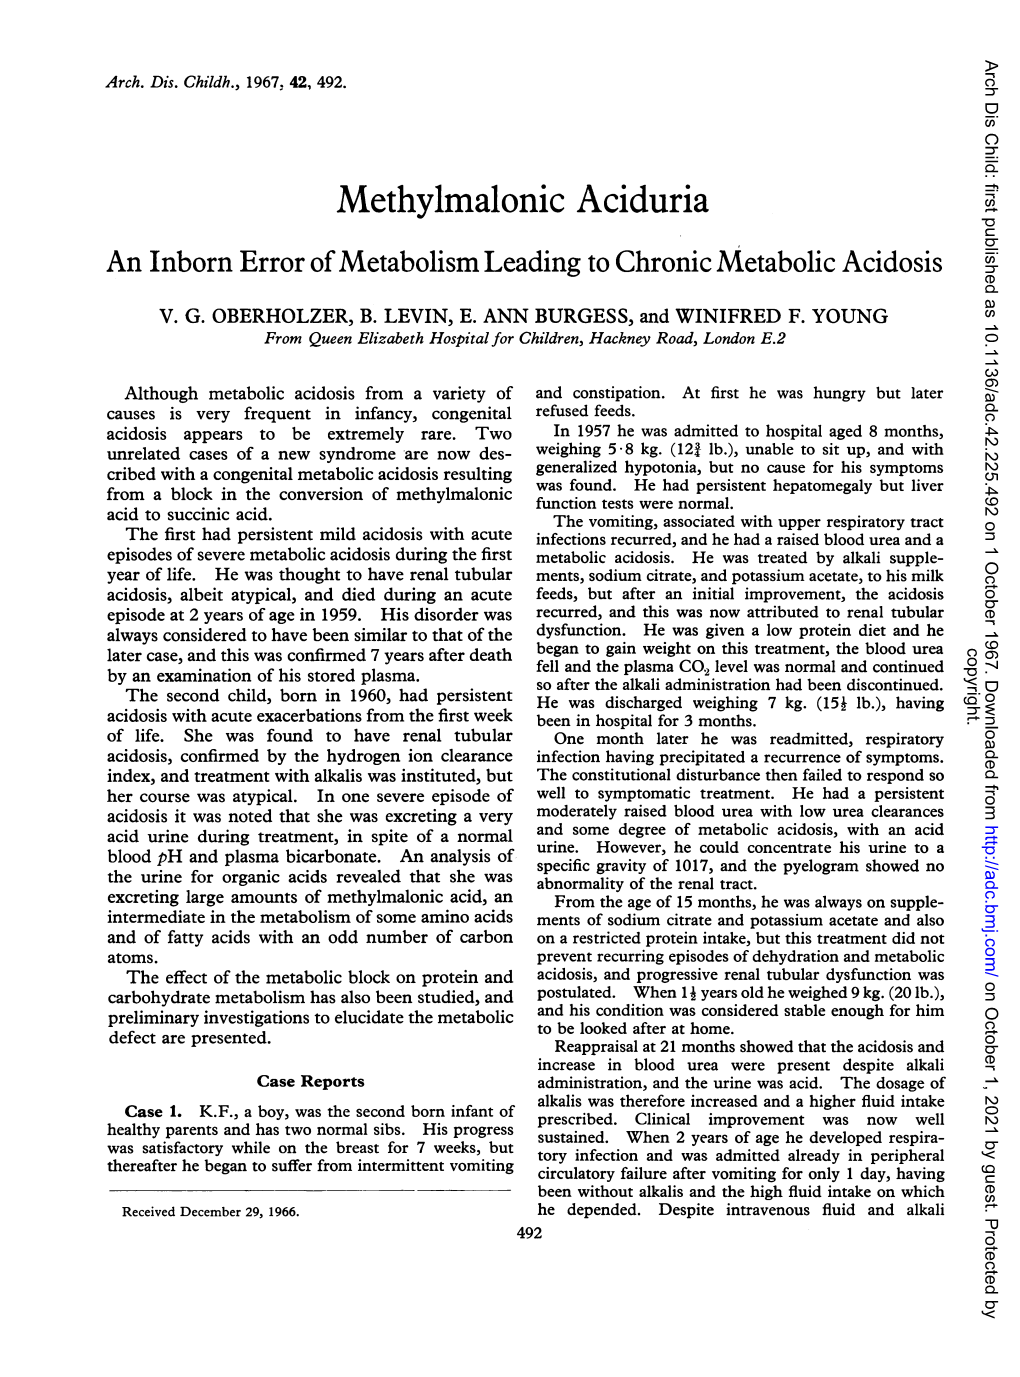 Methylmalonic Aciduria an Inborn Error Ofmetabolism Leading to Chronic Metabolic Acidosis